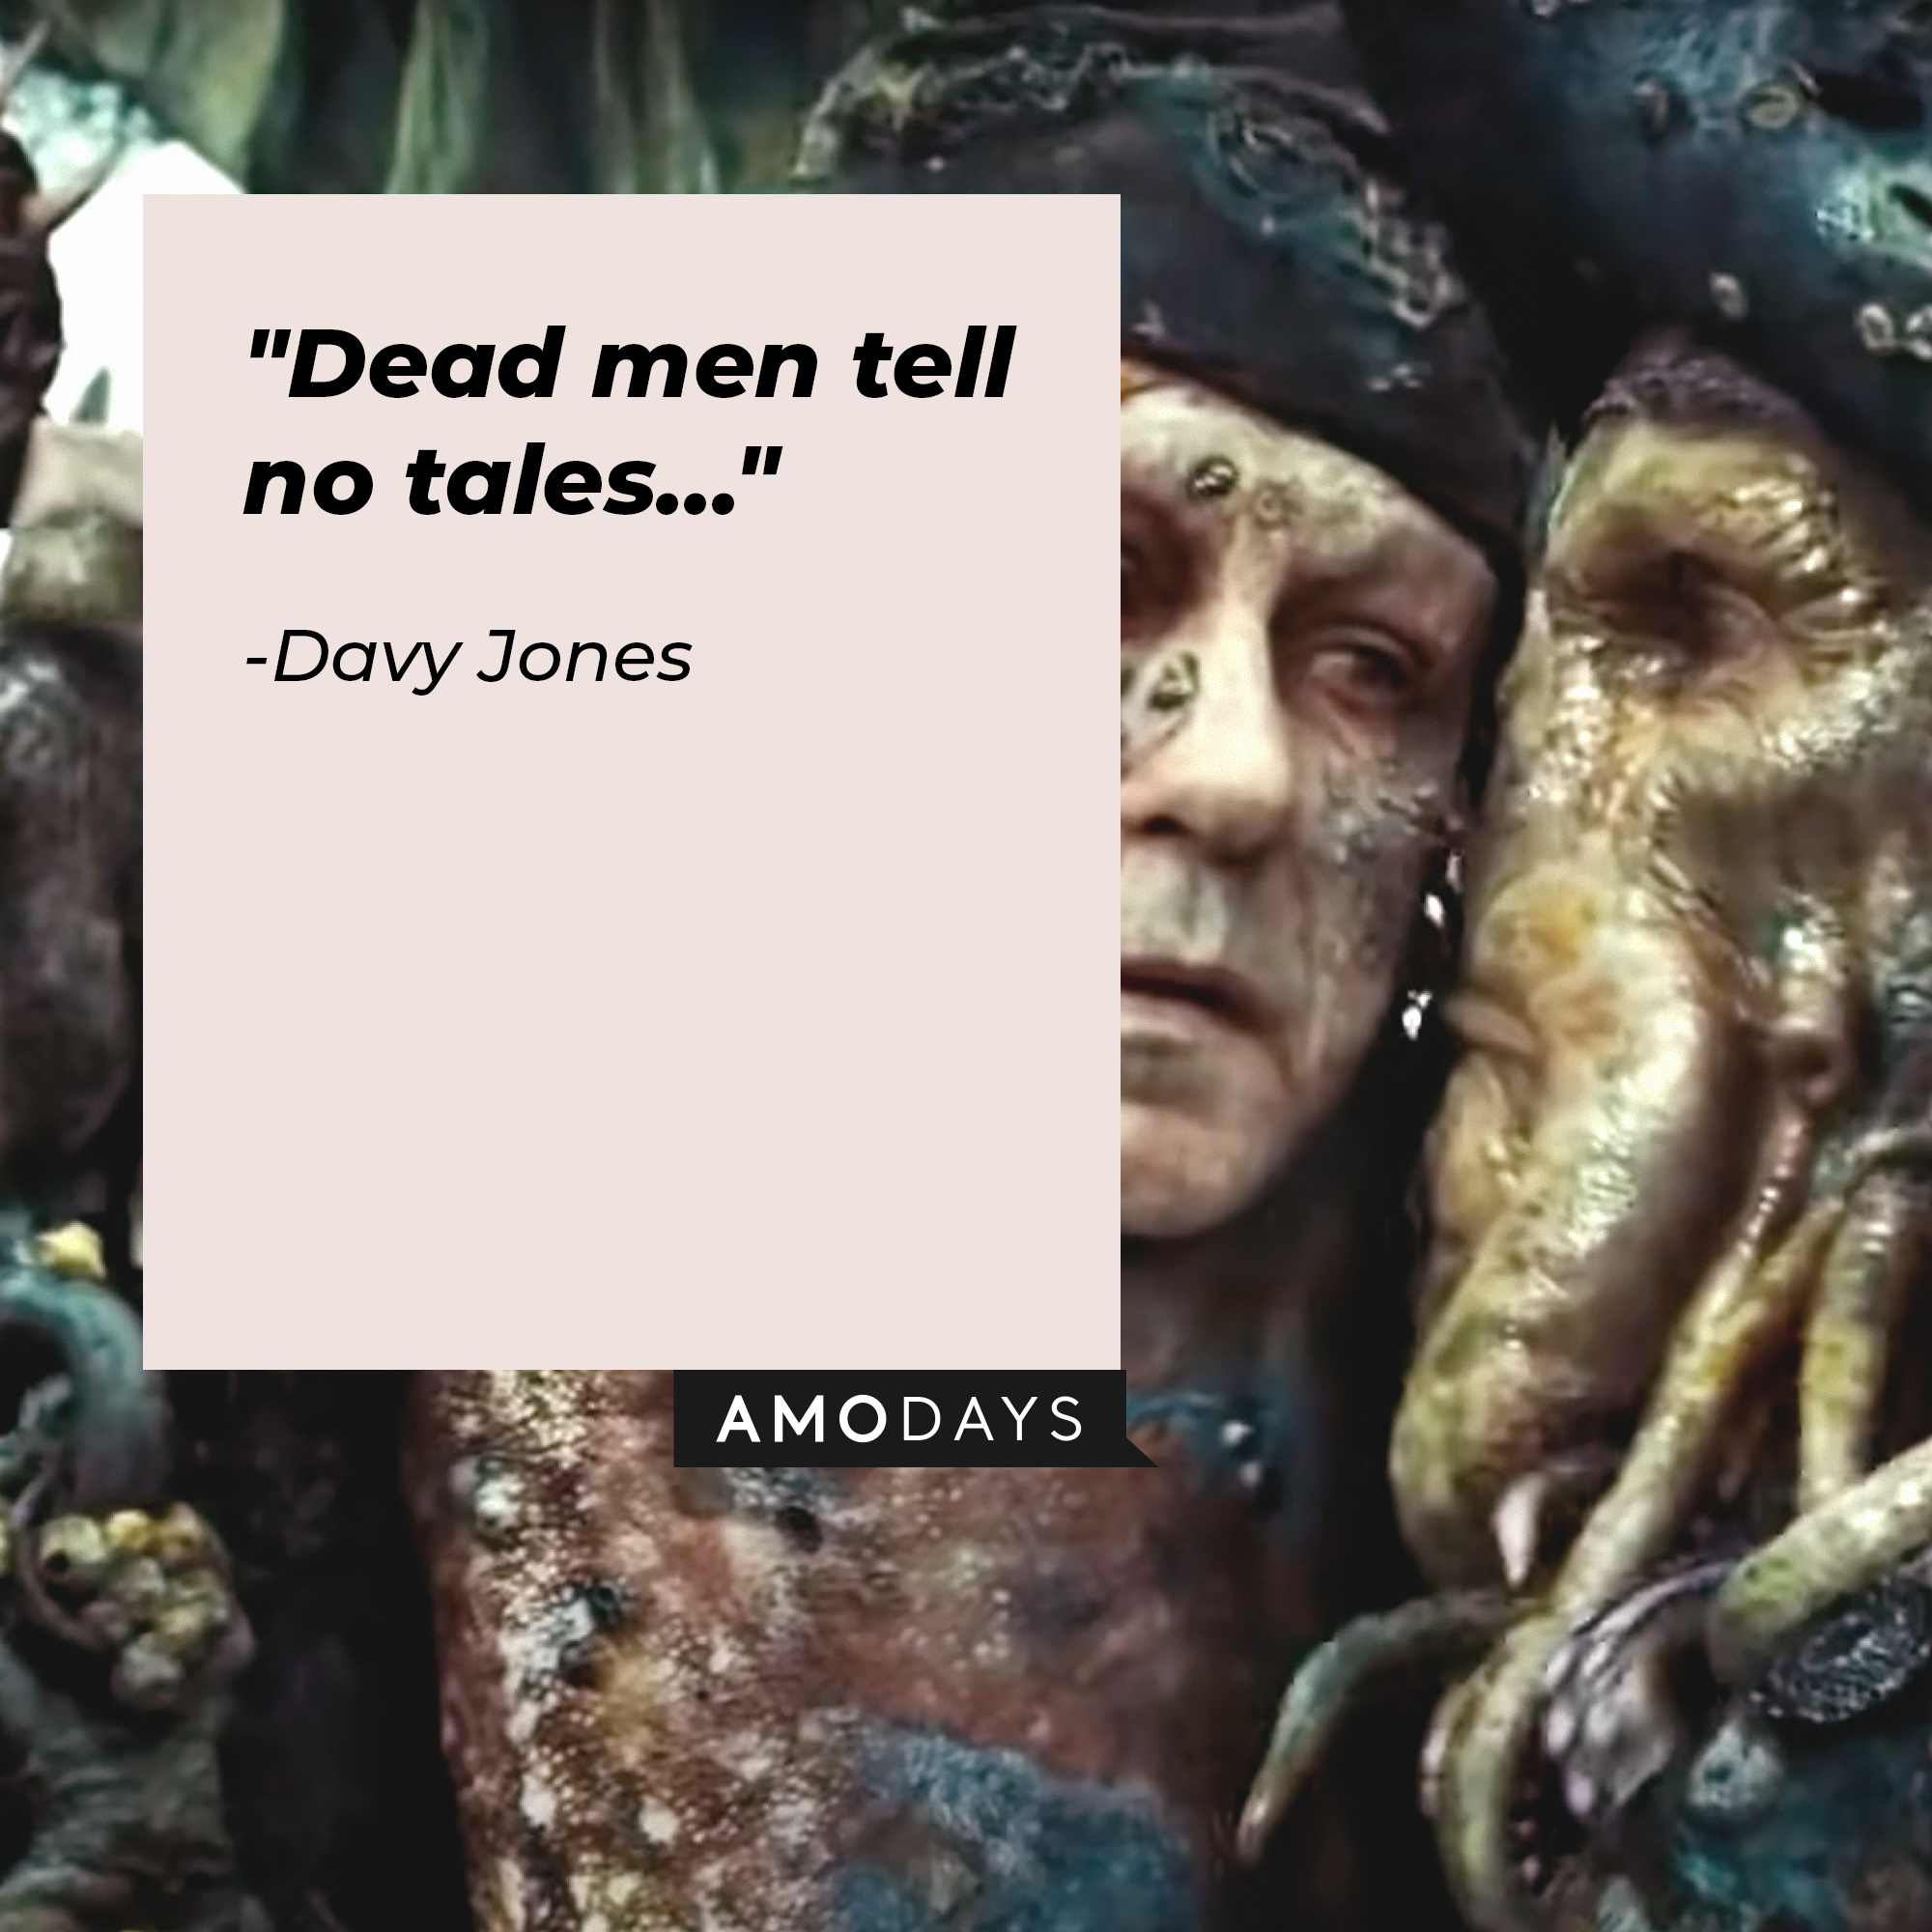 Davy Jones's quotes: "Dead men tell no tales…" | Image: AmoDays